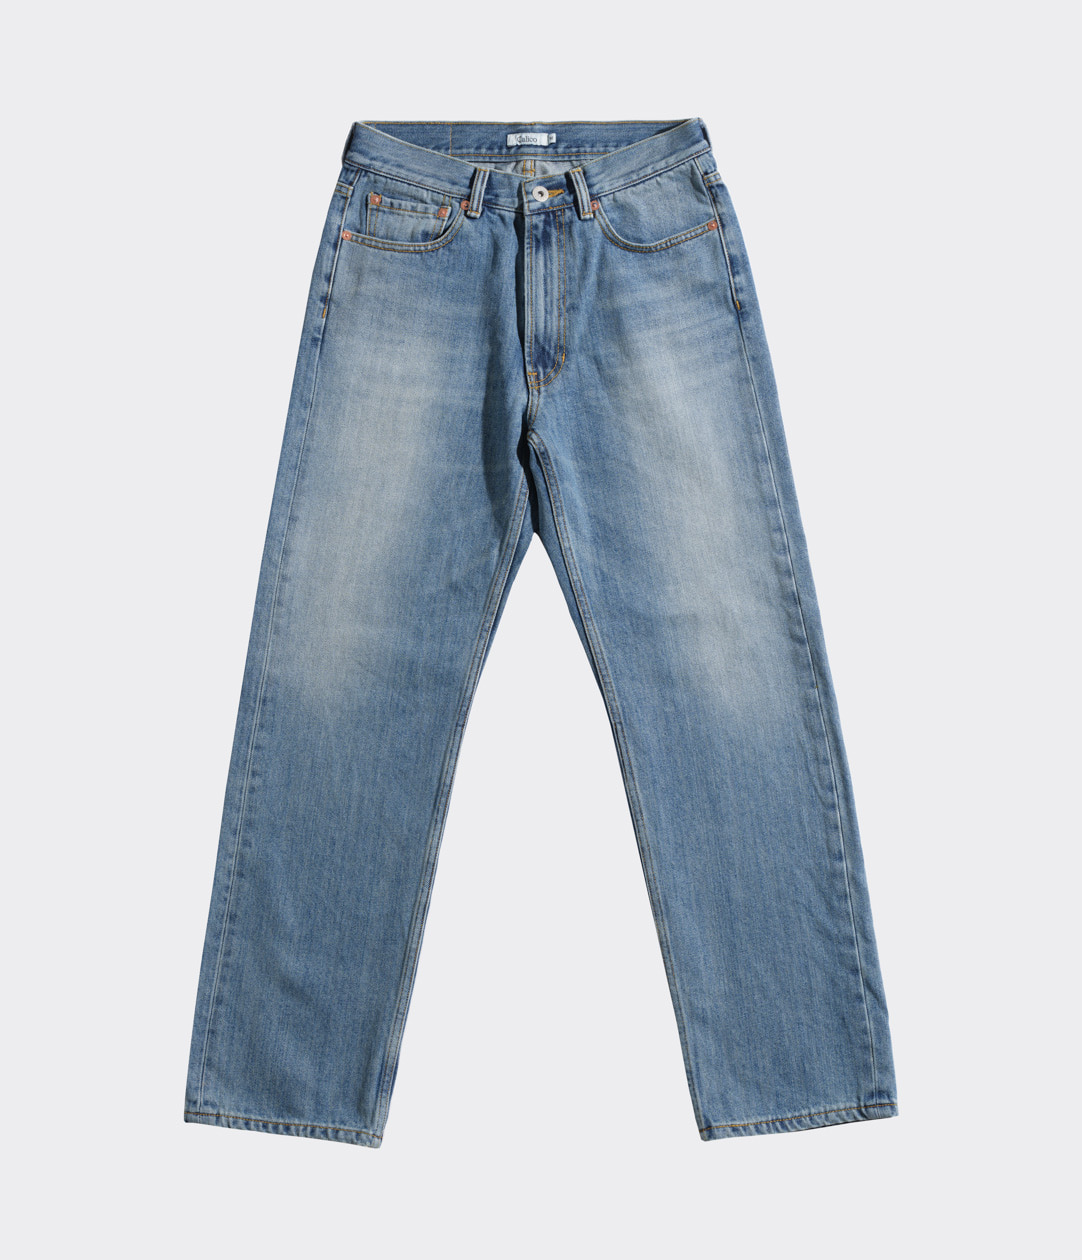 Calico Jeans (2nd Gen) / Balearic Blue